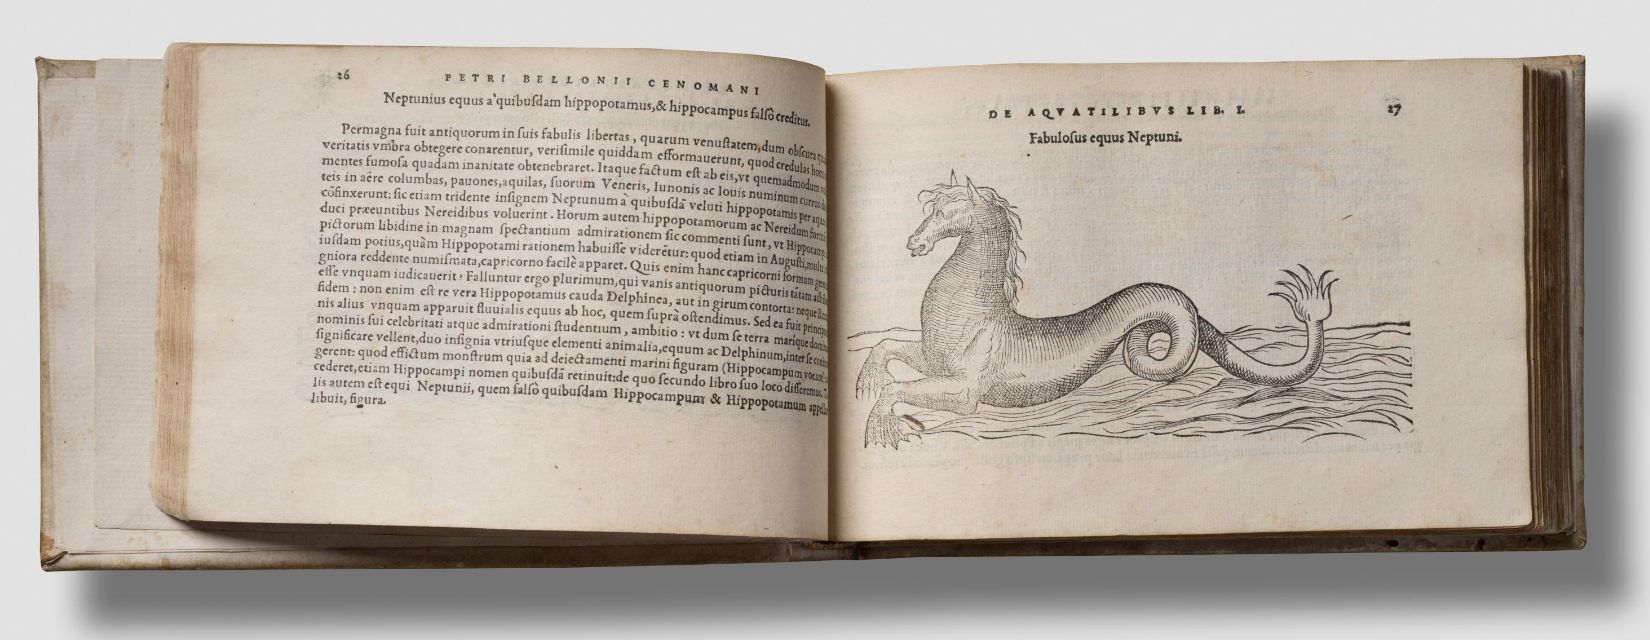 Pierre Belon, De Aquatilibus, 1553. Rare Fish Books Amsterdam](http://rarefishbooks.com/) - Fotografie Cees de Jonge